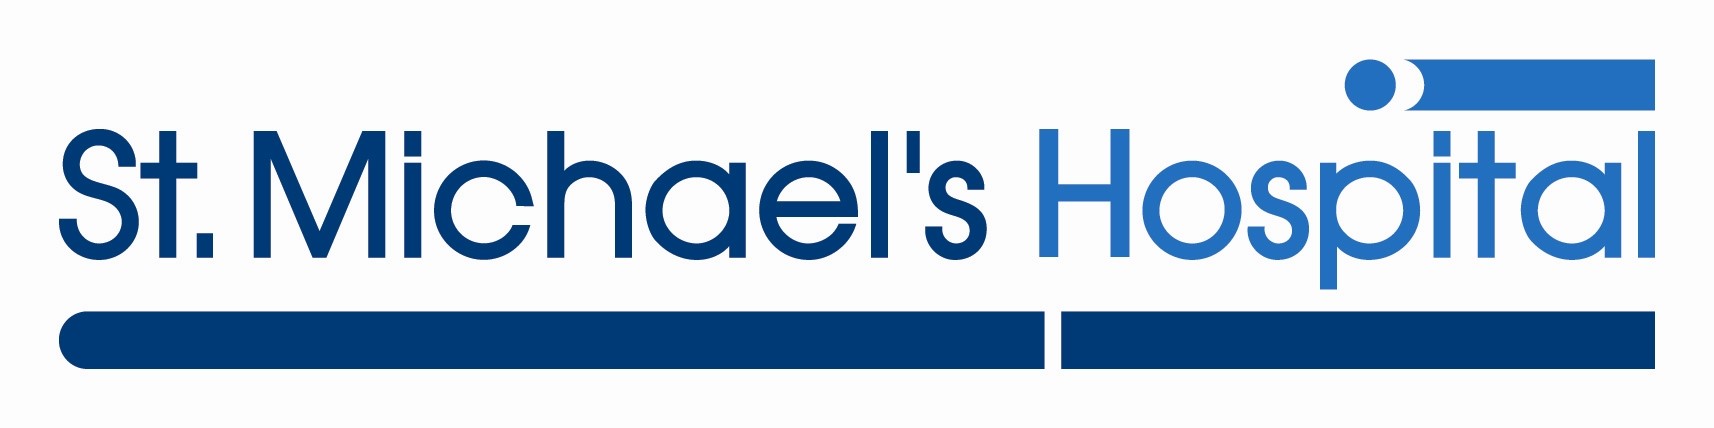 St Michael’s Hospital logo